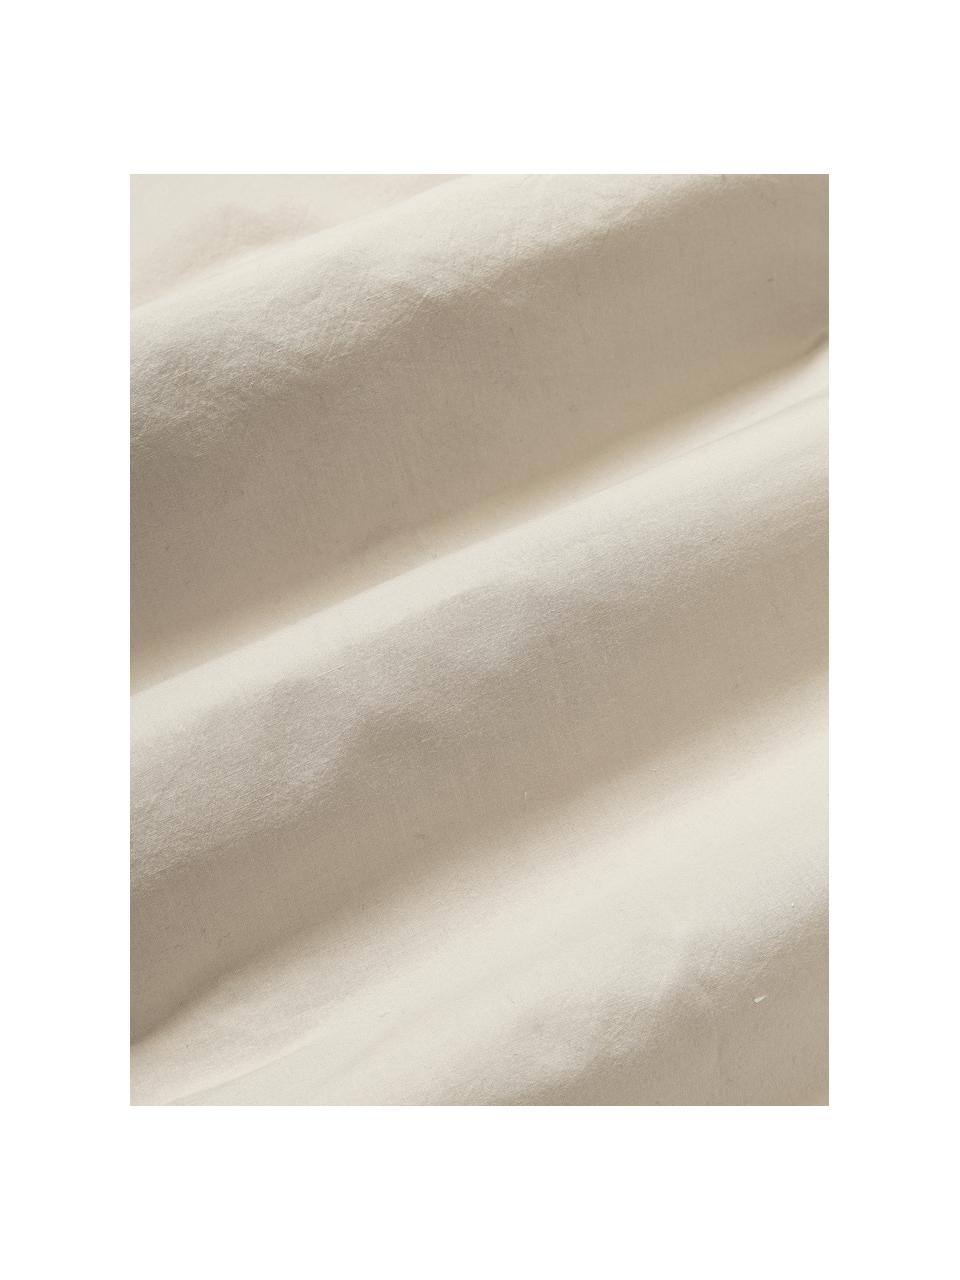 Fundas de almohada de percal con tejido capitoné Fia, 2 uds., Beige claro, An 40 x L 80 cm